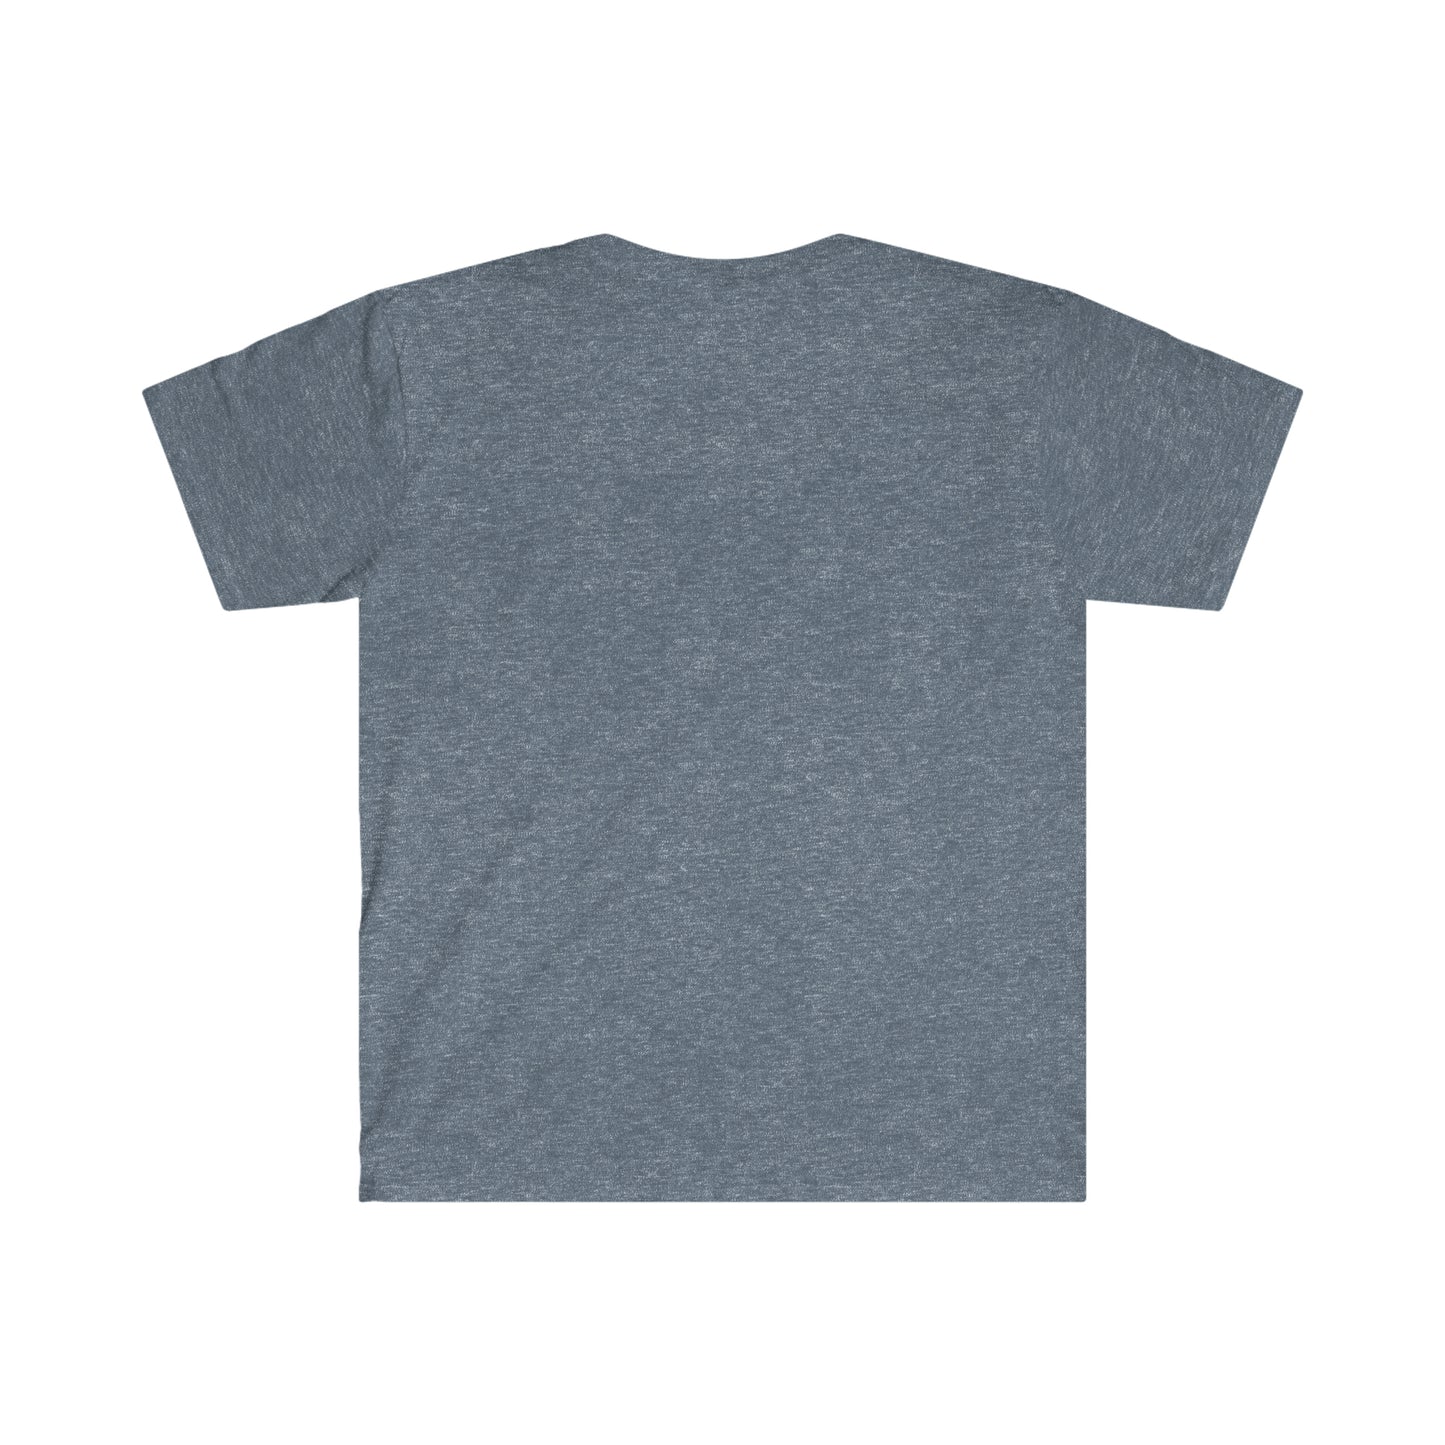 Tannerite® Basic Logo Tshirt - choose your color